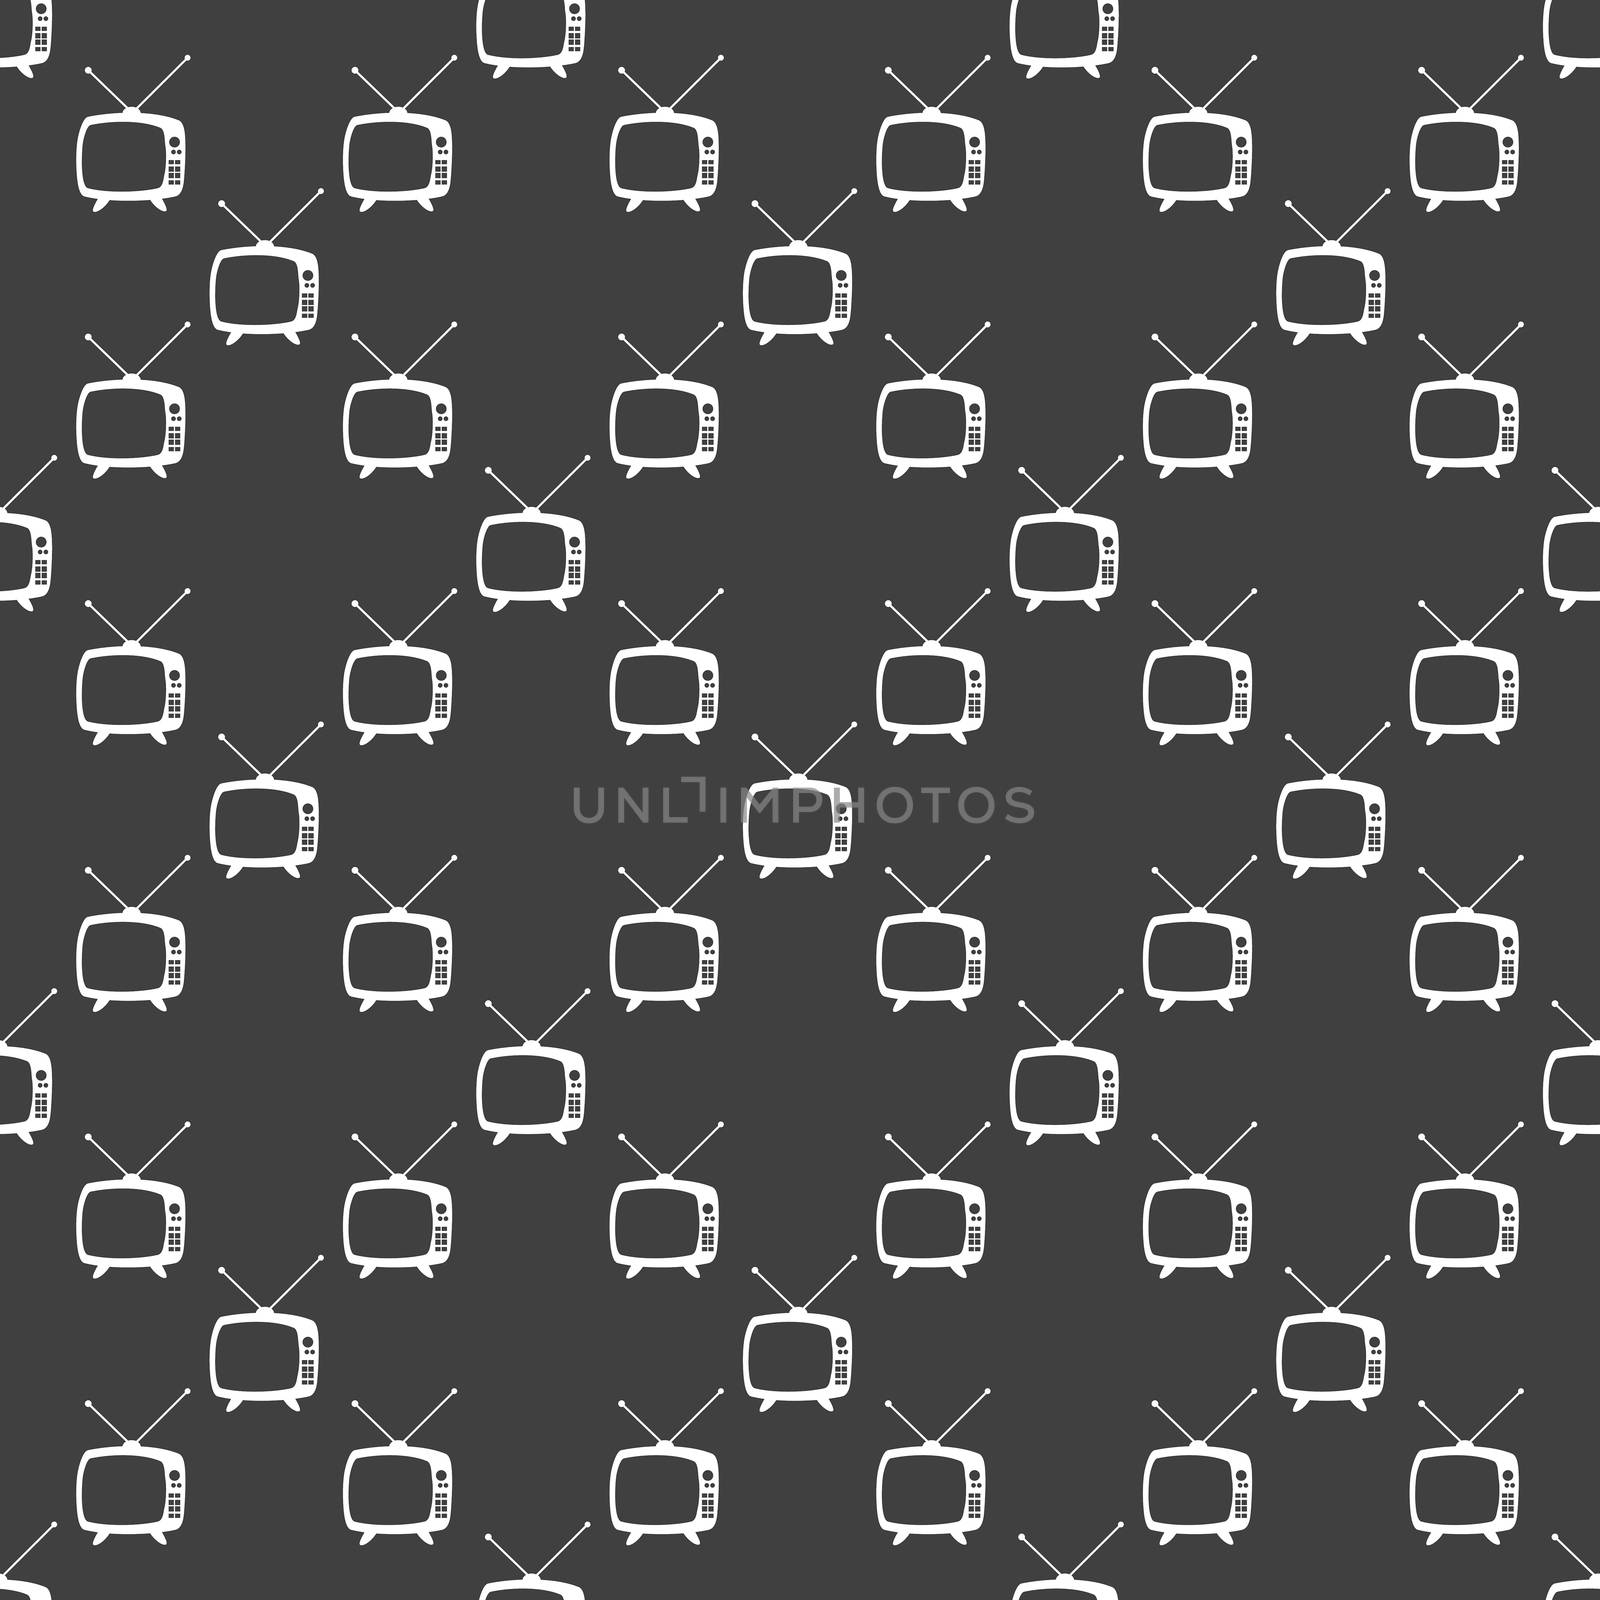 Retro tv web icon. flat design. Seamless gray pattern. by serhii_lohvyniuk